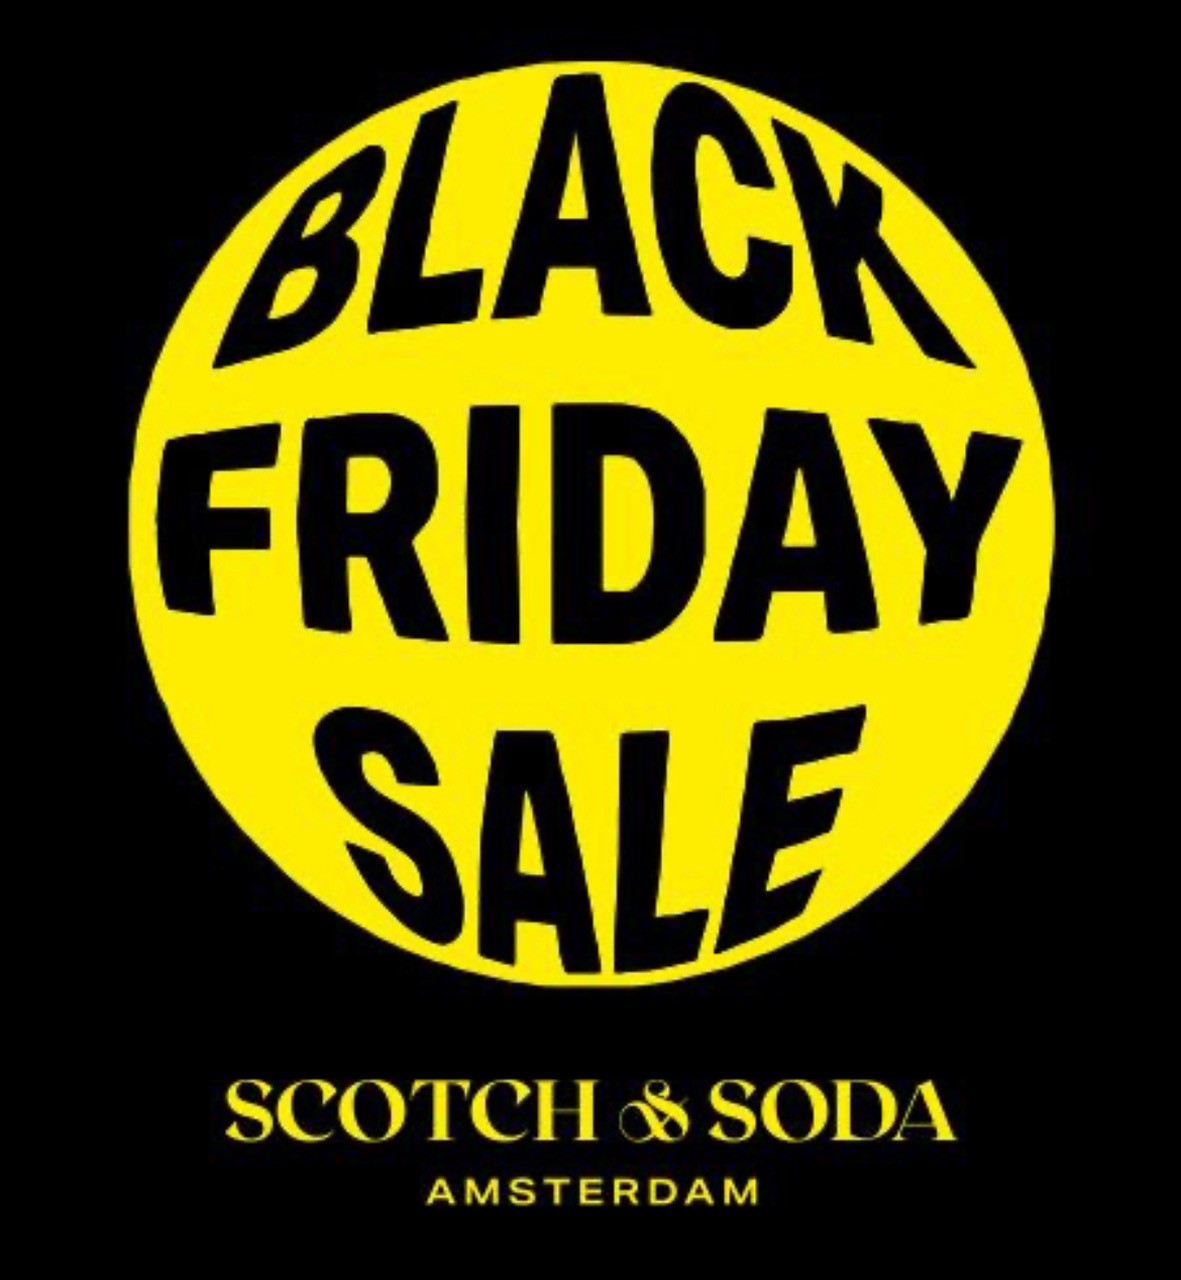 Black Friday Sale from Scotch & Soda